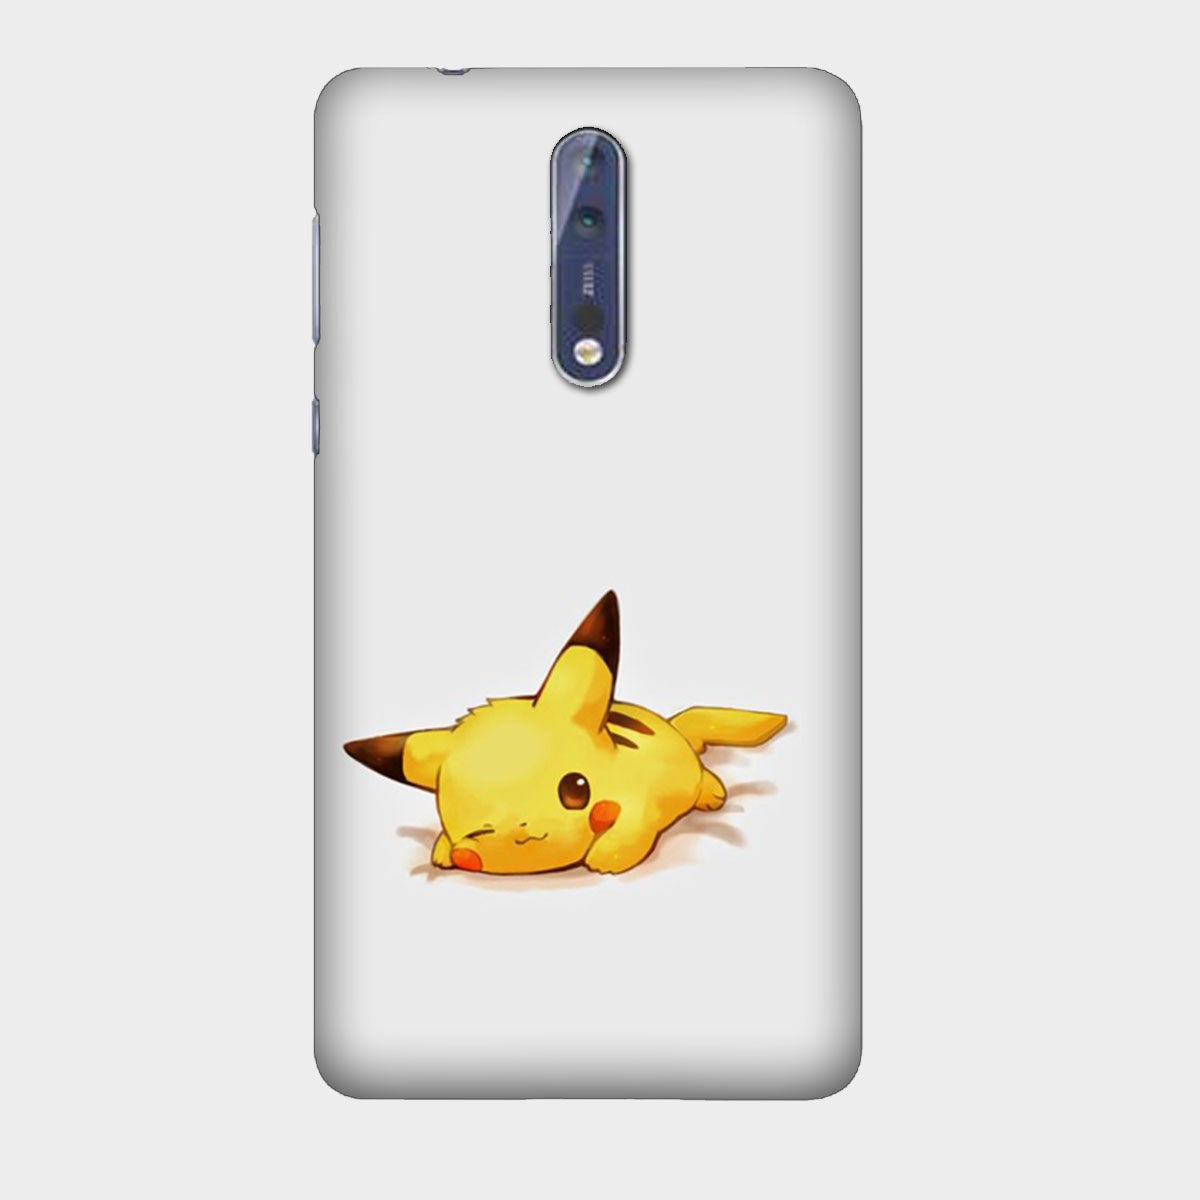 Pikachu - Pokemon - Mobile Phone Cover - Hard Case